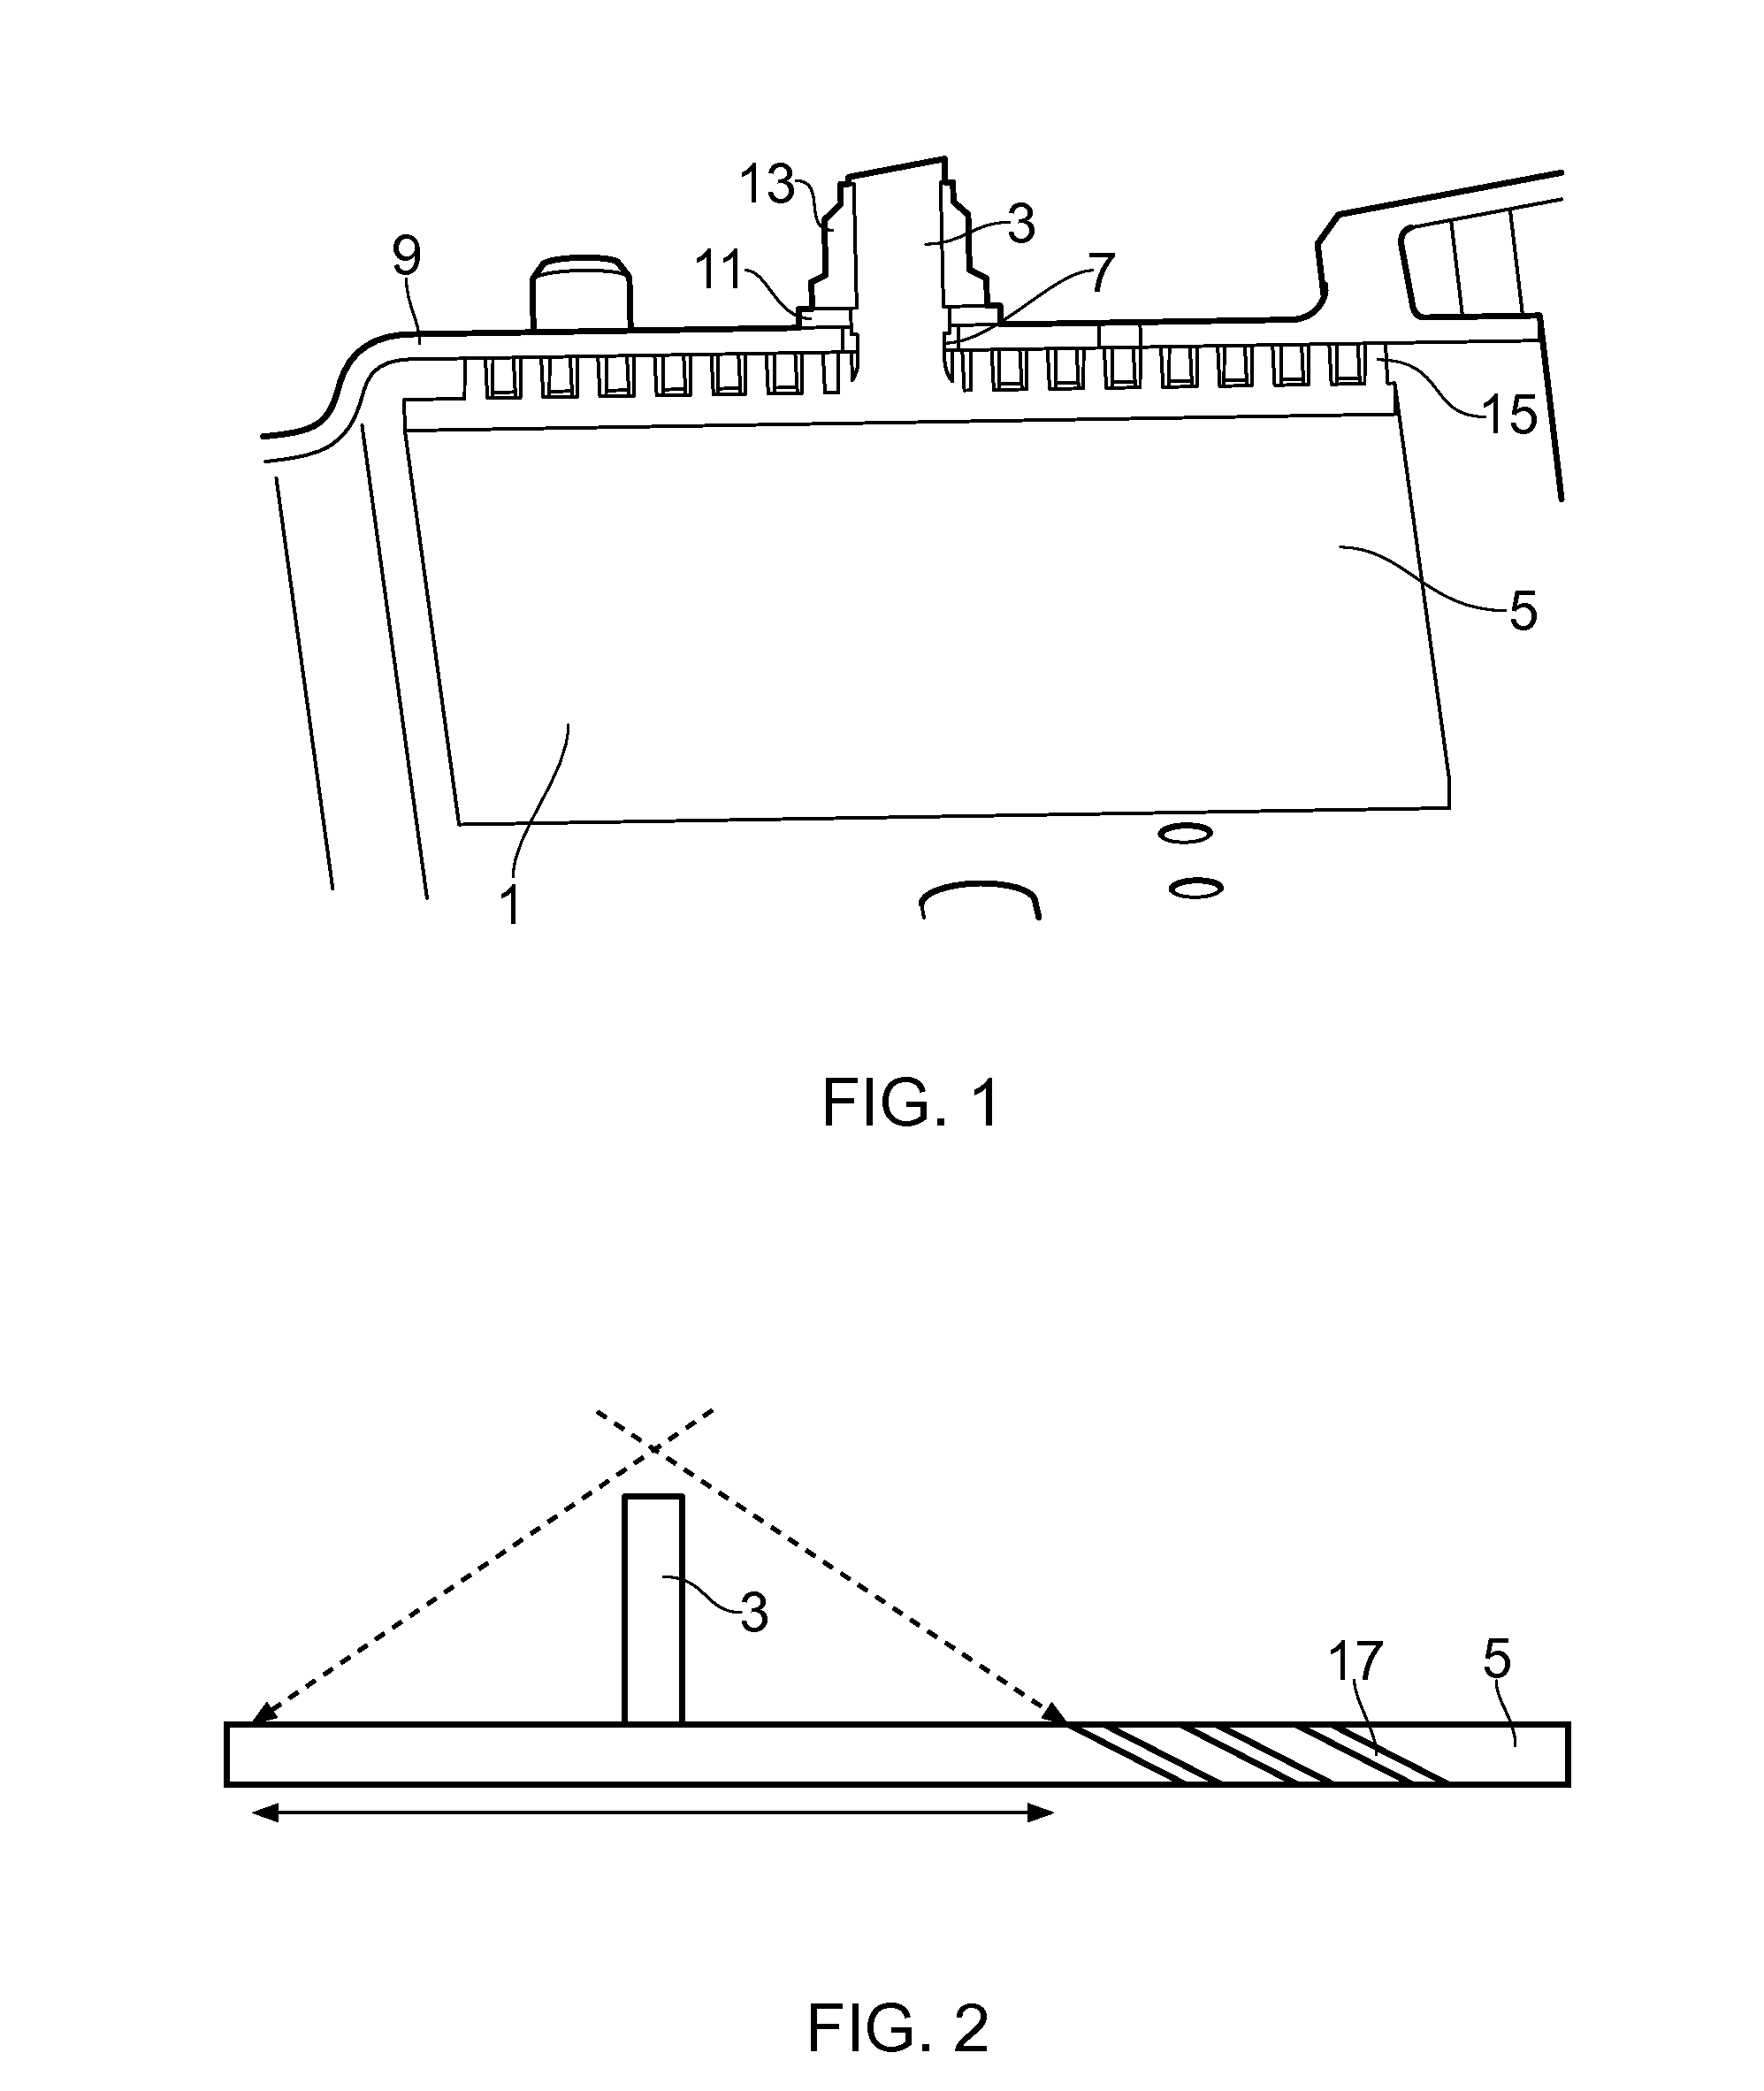 Combustor tile mounting arrangement